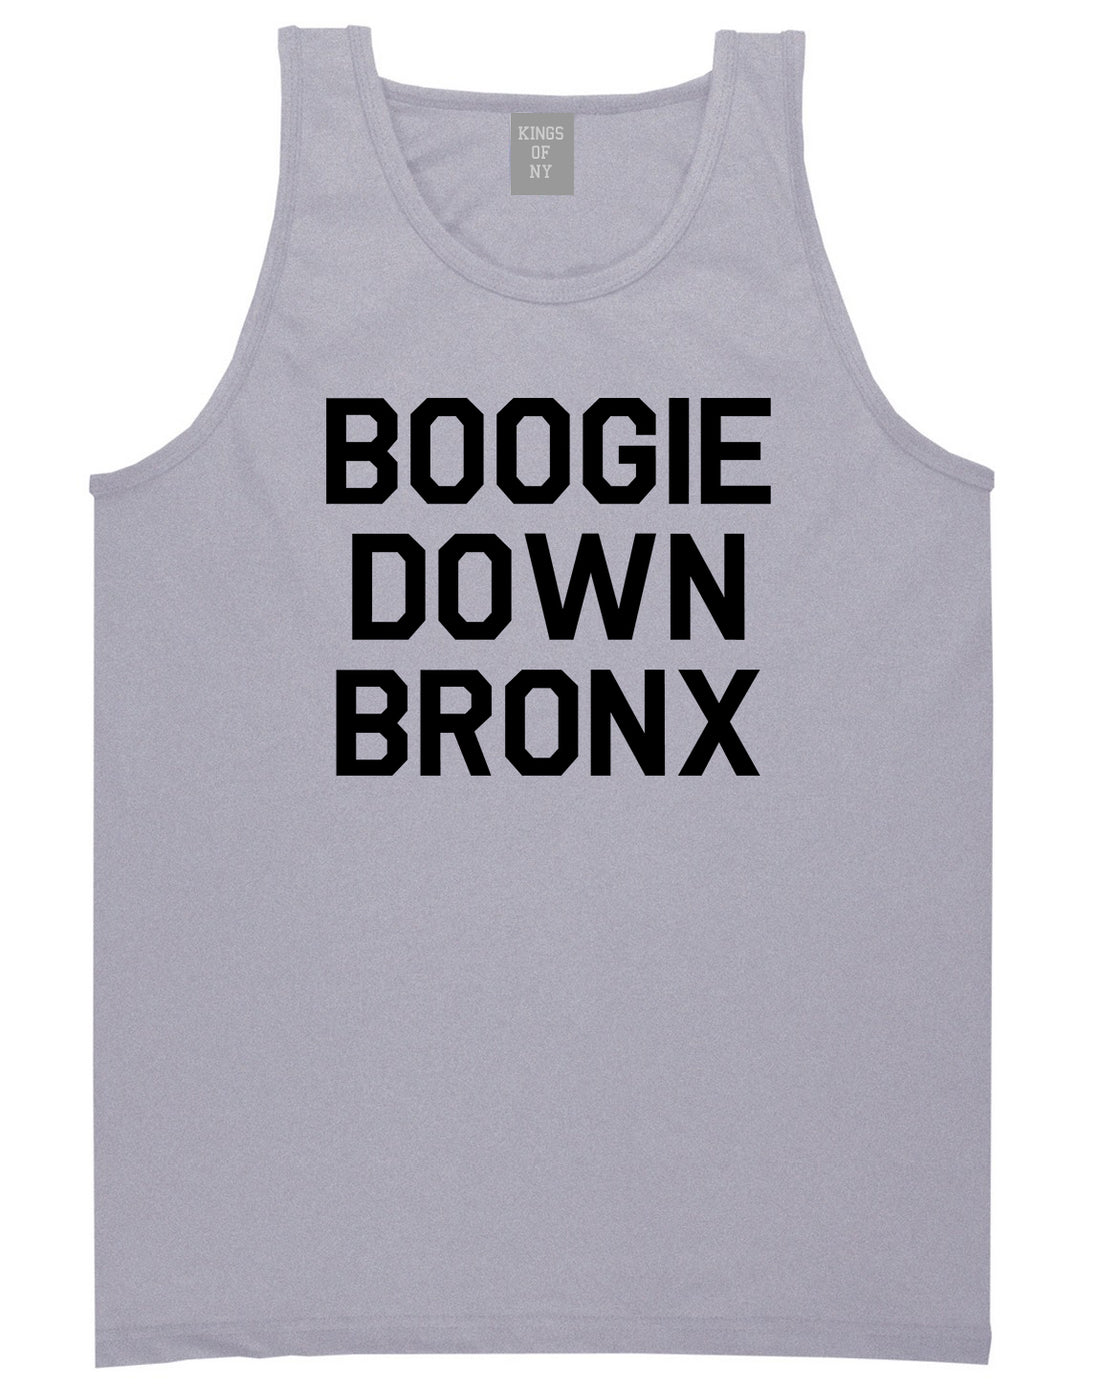 Boogie Down Bronx Mens Tank Top Shirt Grey by Kings Of NY